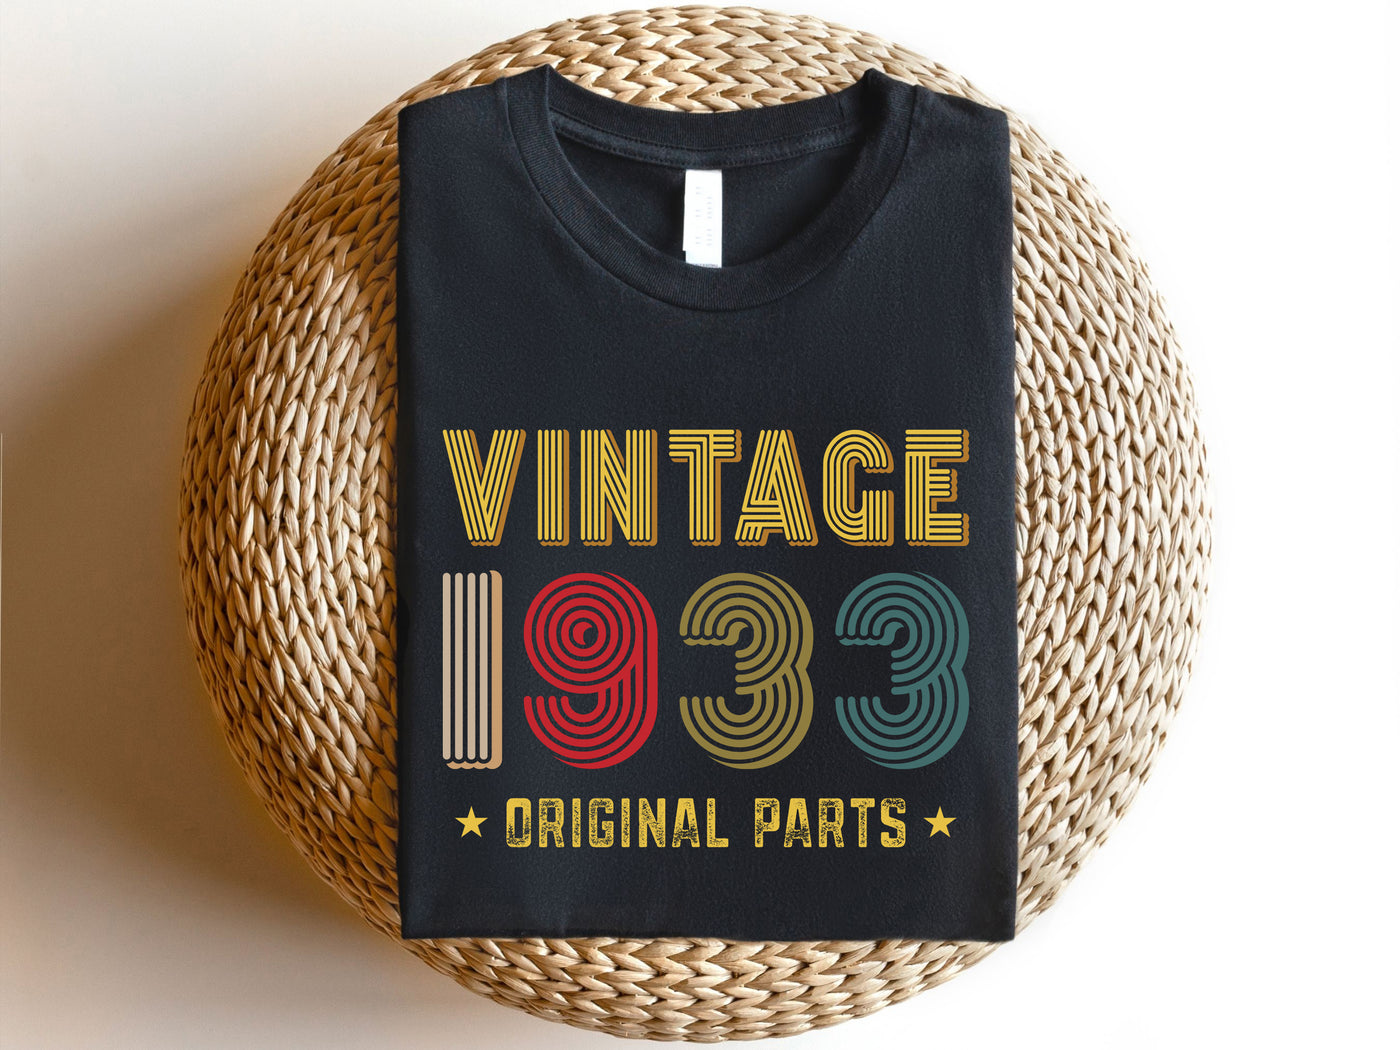 VINTAGE-1933-ORIGINAL-PARTS COLORED